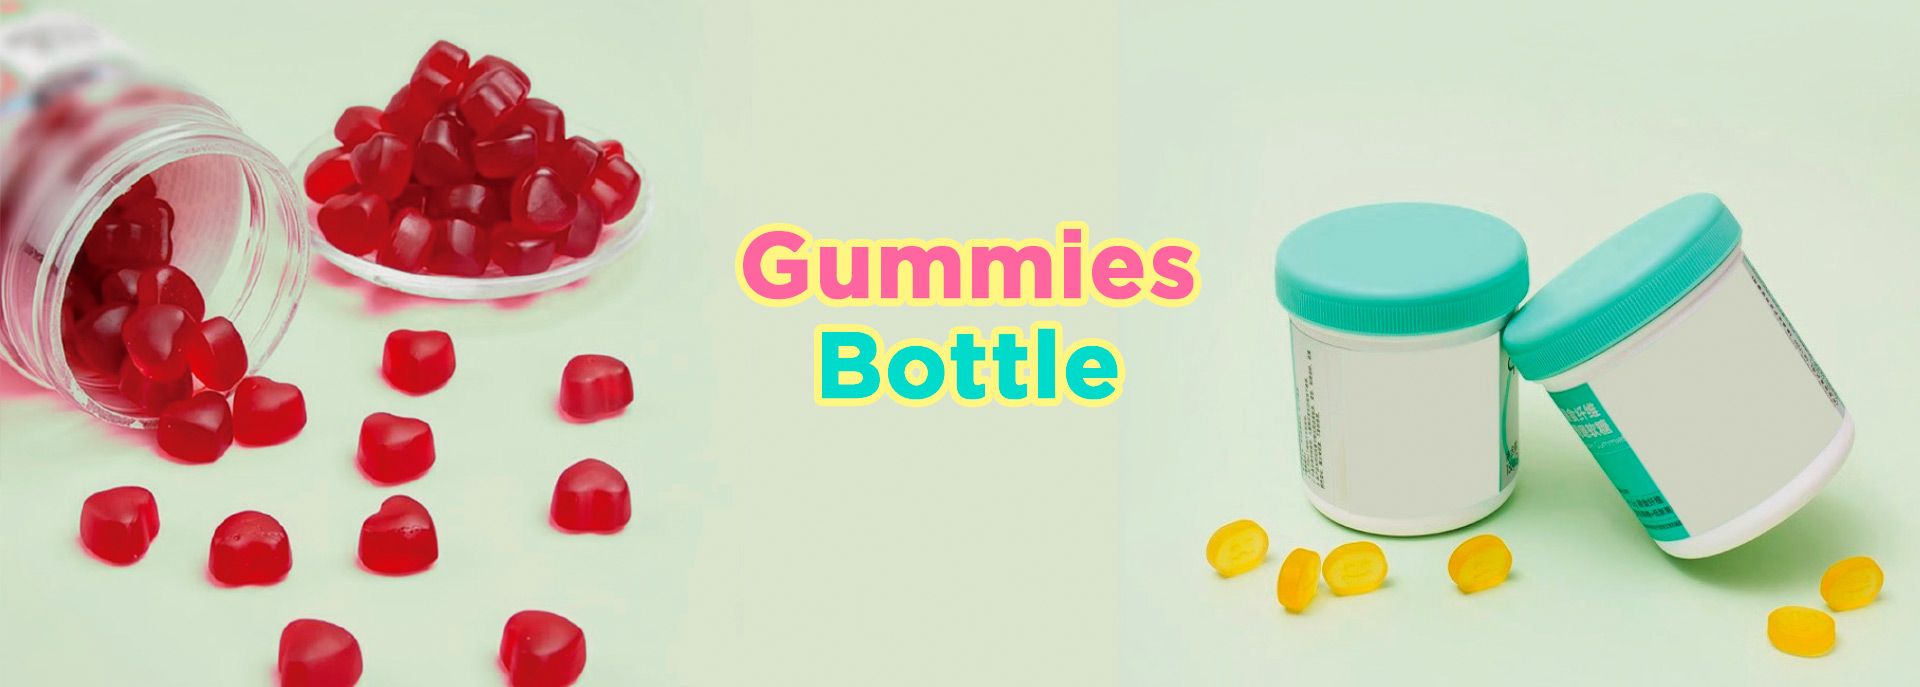 Gummies Bottle